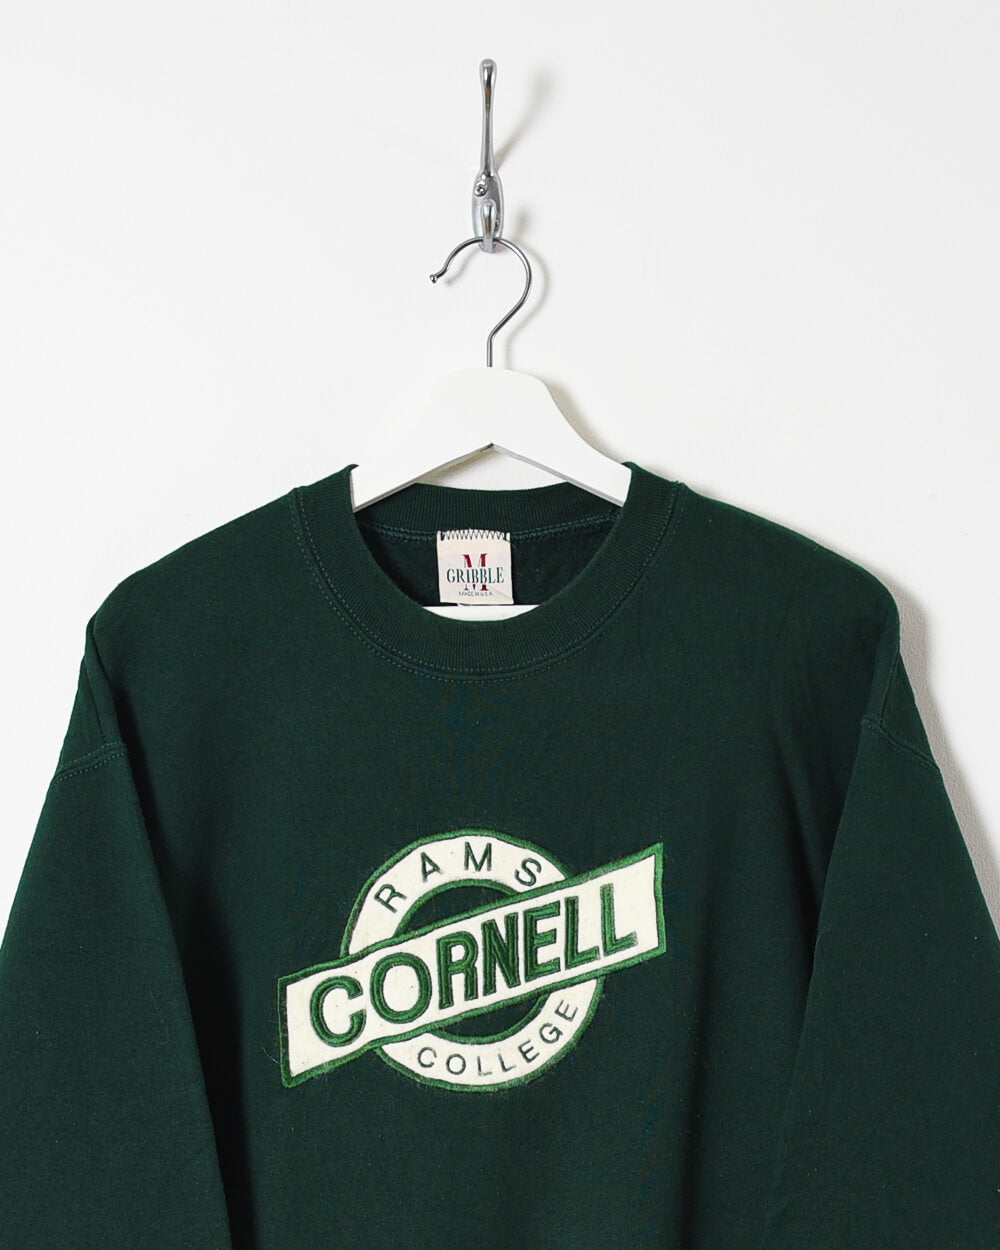 Gribble Rams Cornell College Sweatshirt - Medium - Domno Vintage 90s, 80s, 00s Retro and Vintage Clothing 